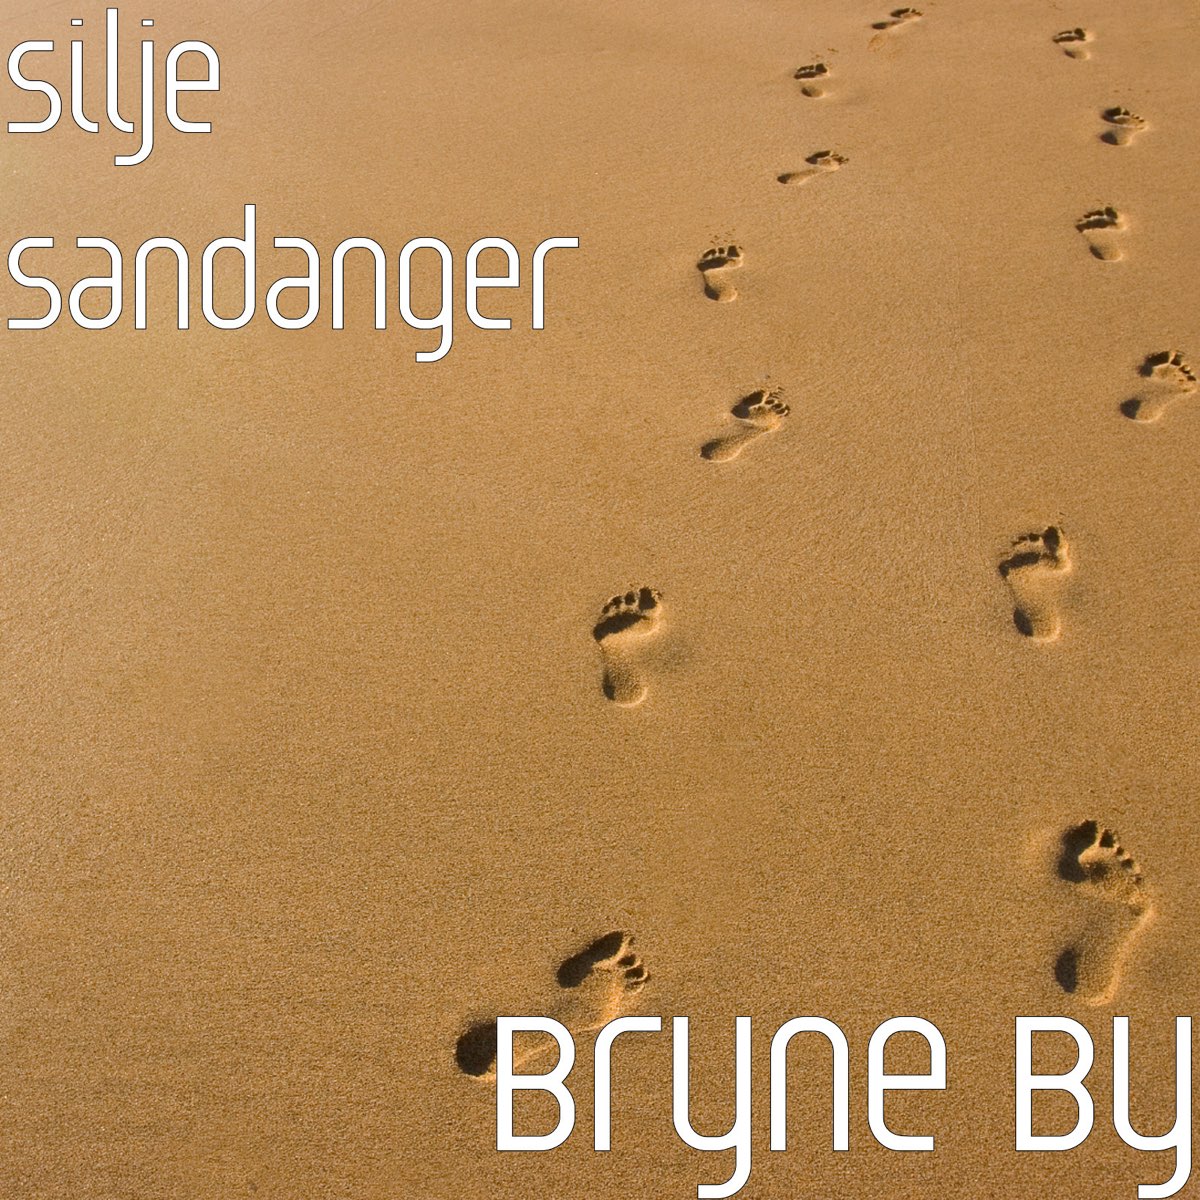 Bryne By - Single - Album by Silje Sandanger - Apple Music